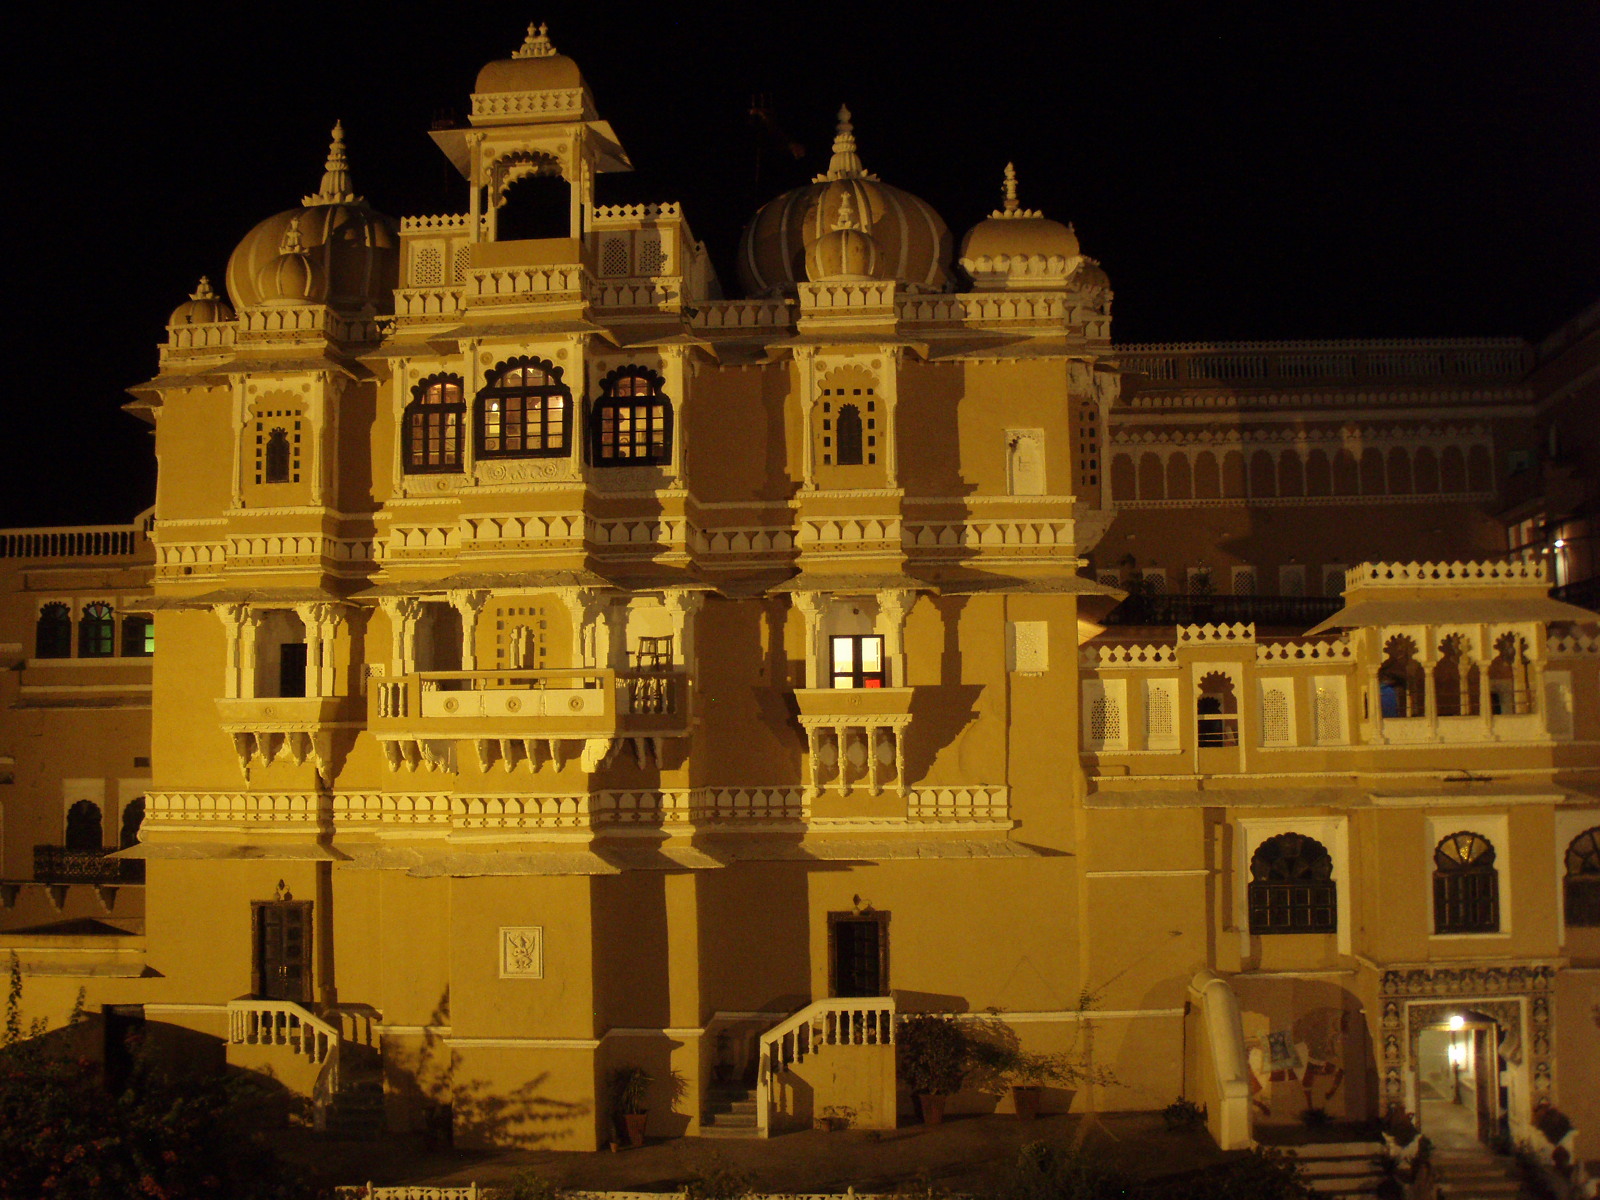 Deogarh Mahal heritage luxury hotel by night